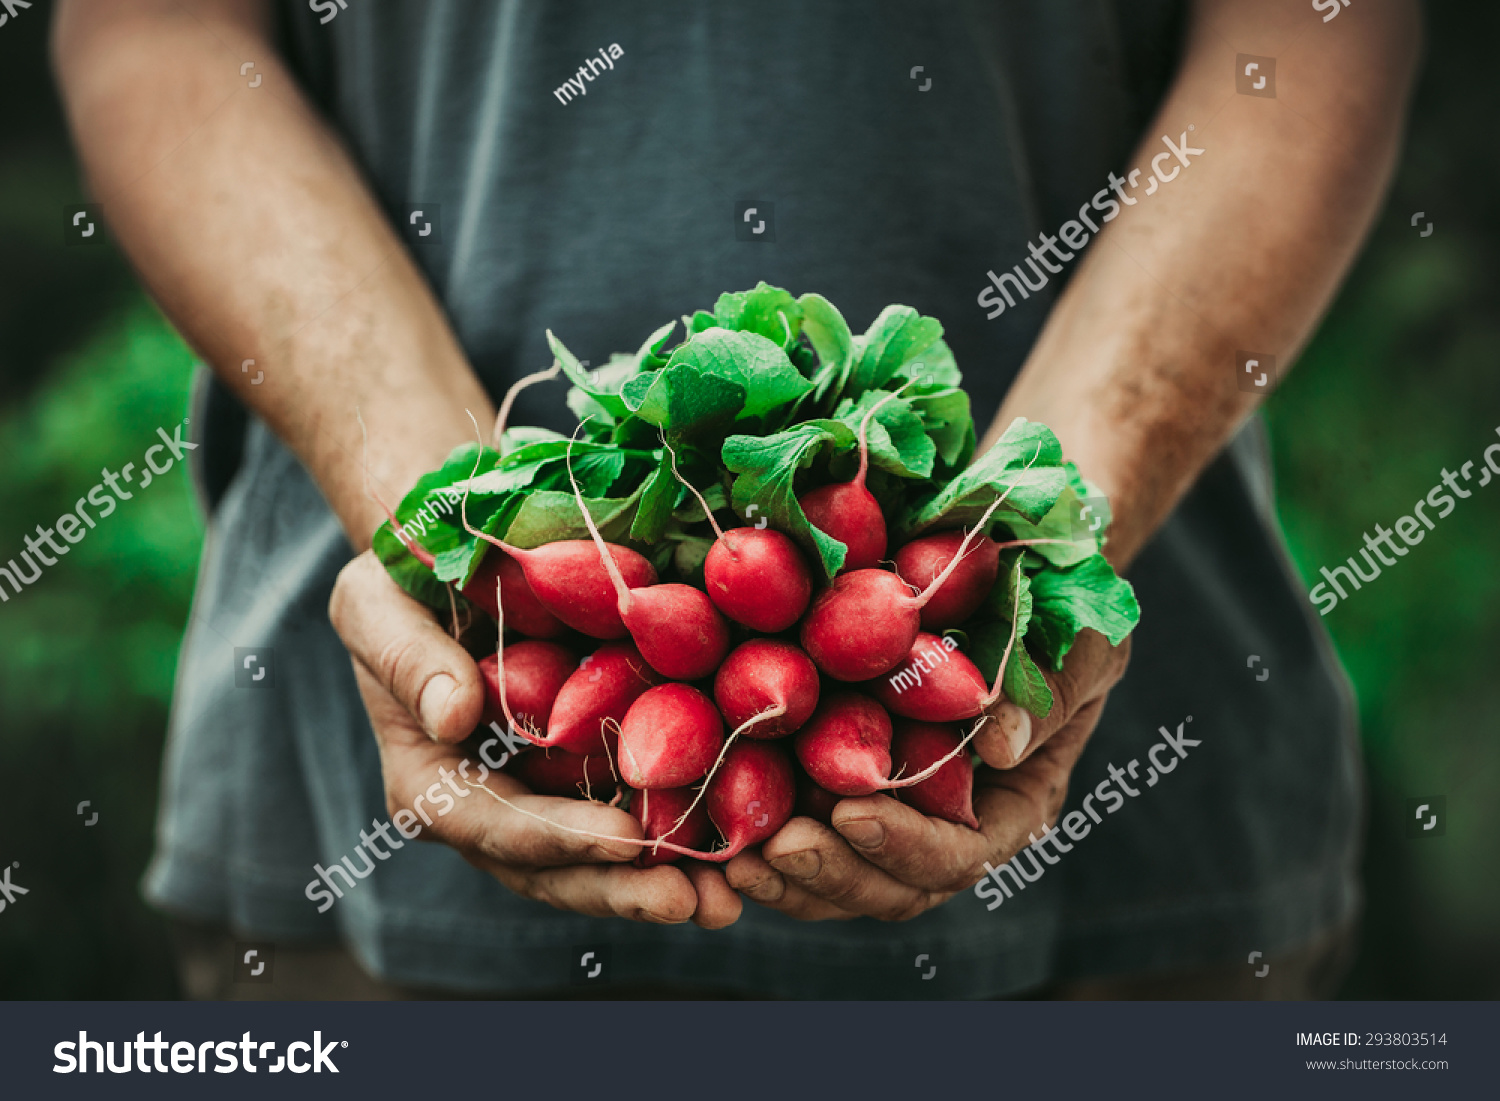 Organic vegetables. Farmers hands with freshly harvested vegetables. Horse radish #293803514